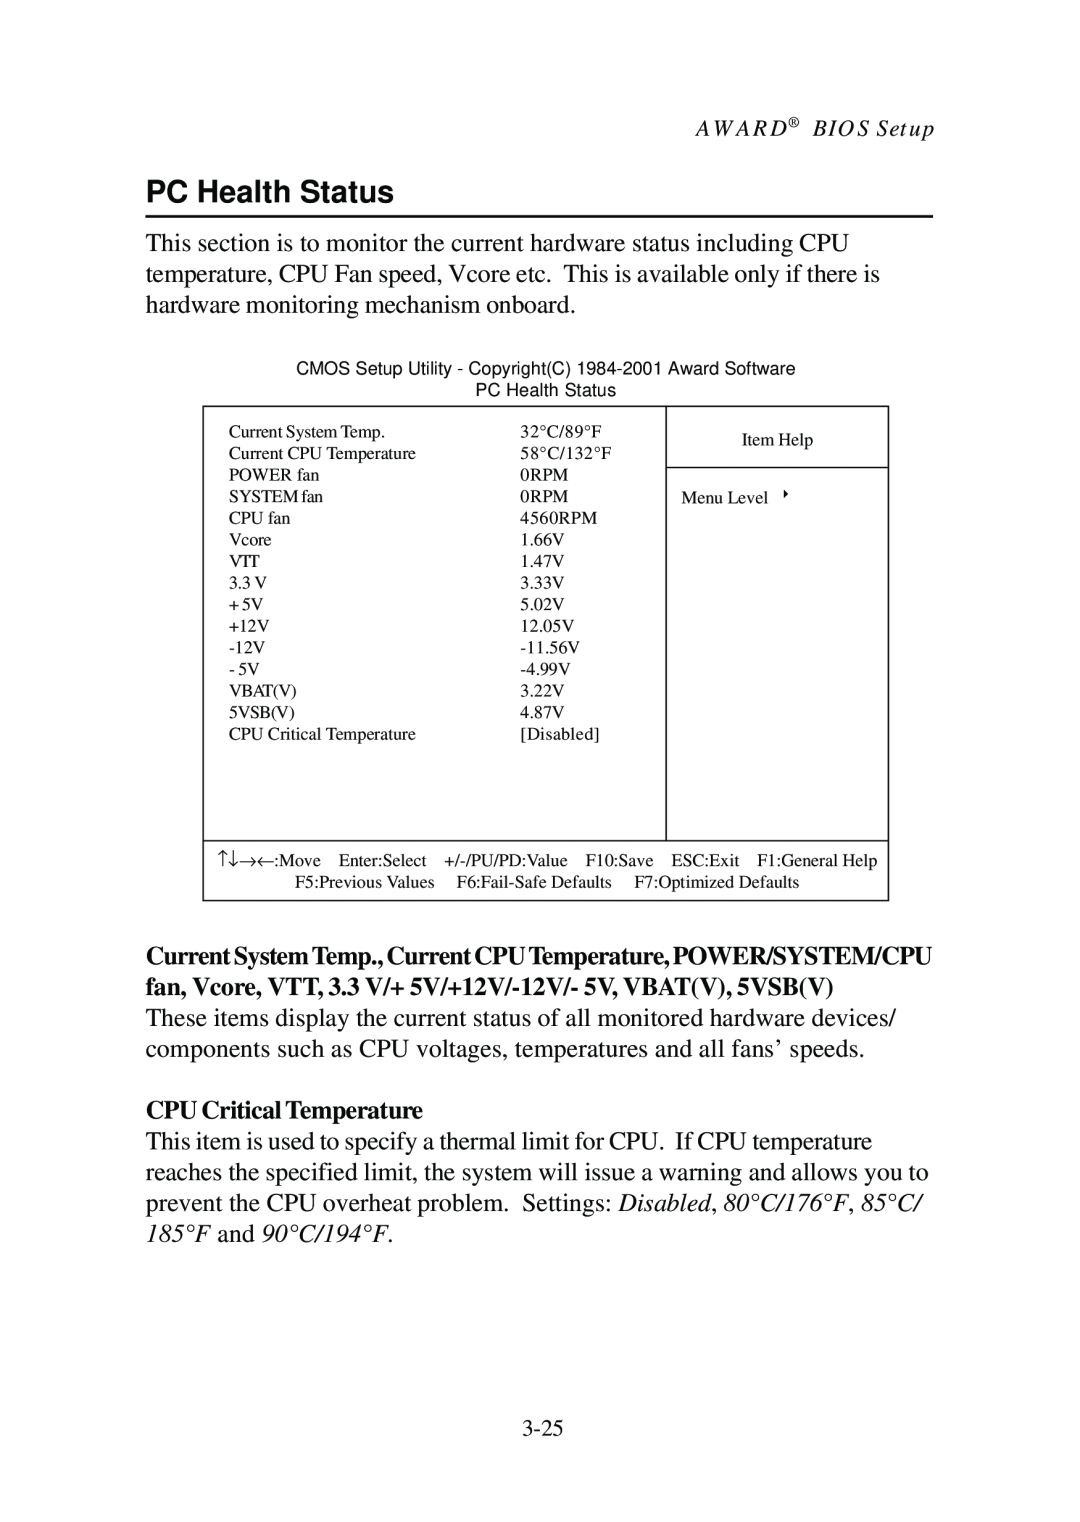 Premio Computer Aries/Centella manual PC Health Status, CPU Critical Temperature 